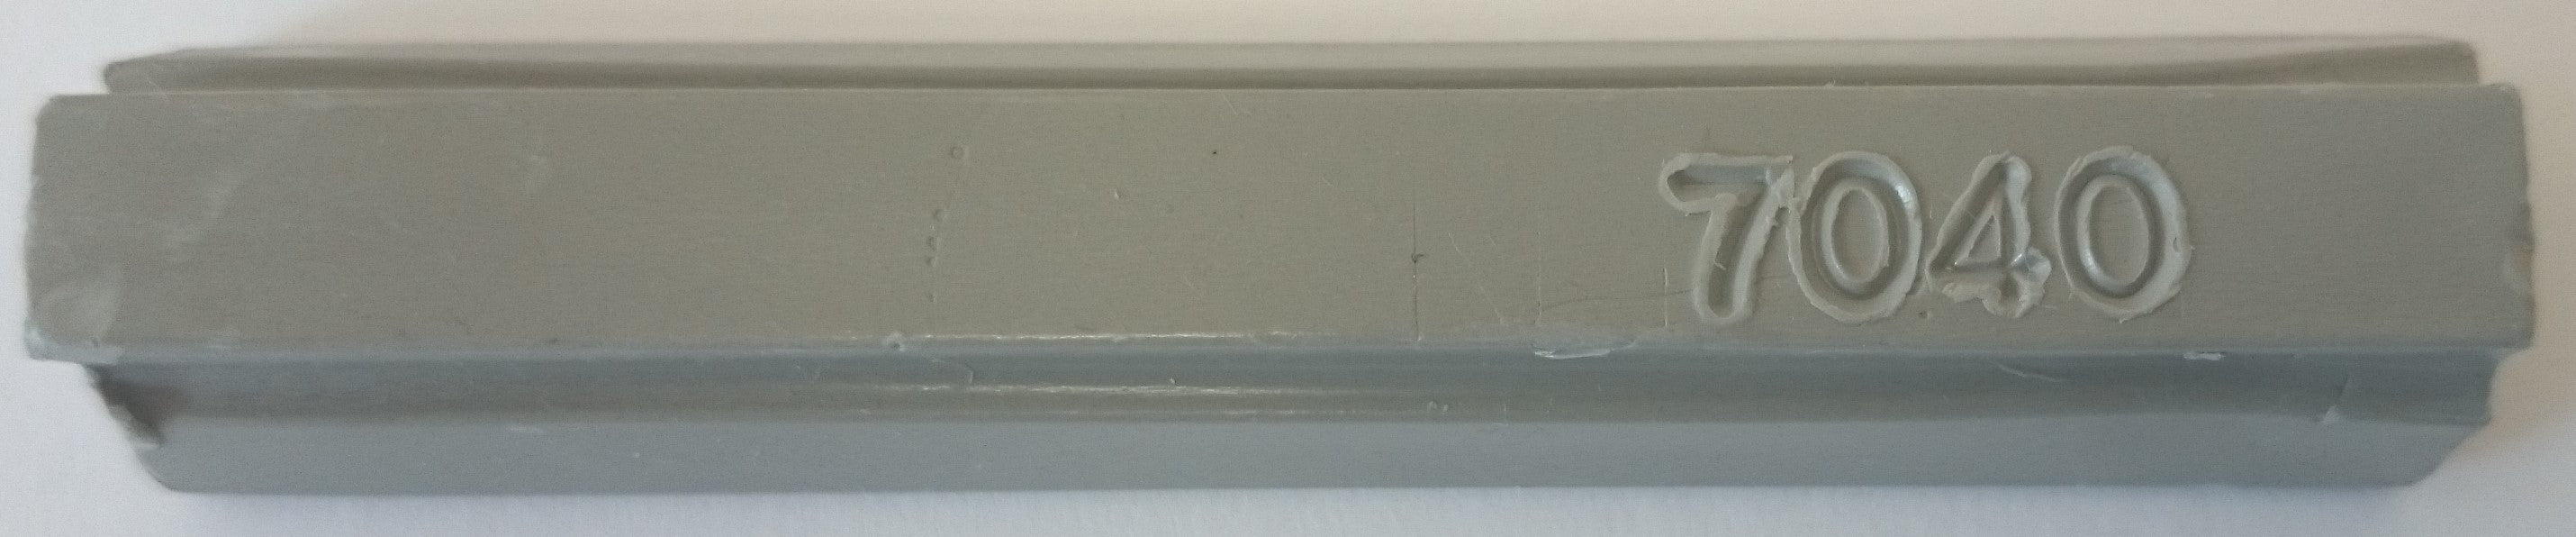 Konig 8cm Soft Wax or Hard Wax Filler Stick RAL 7040 WINDOW GREY